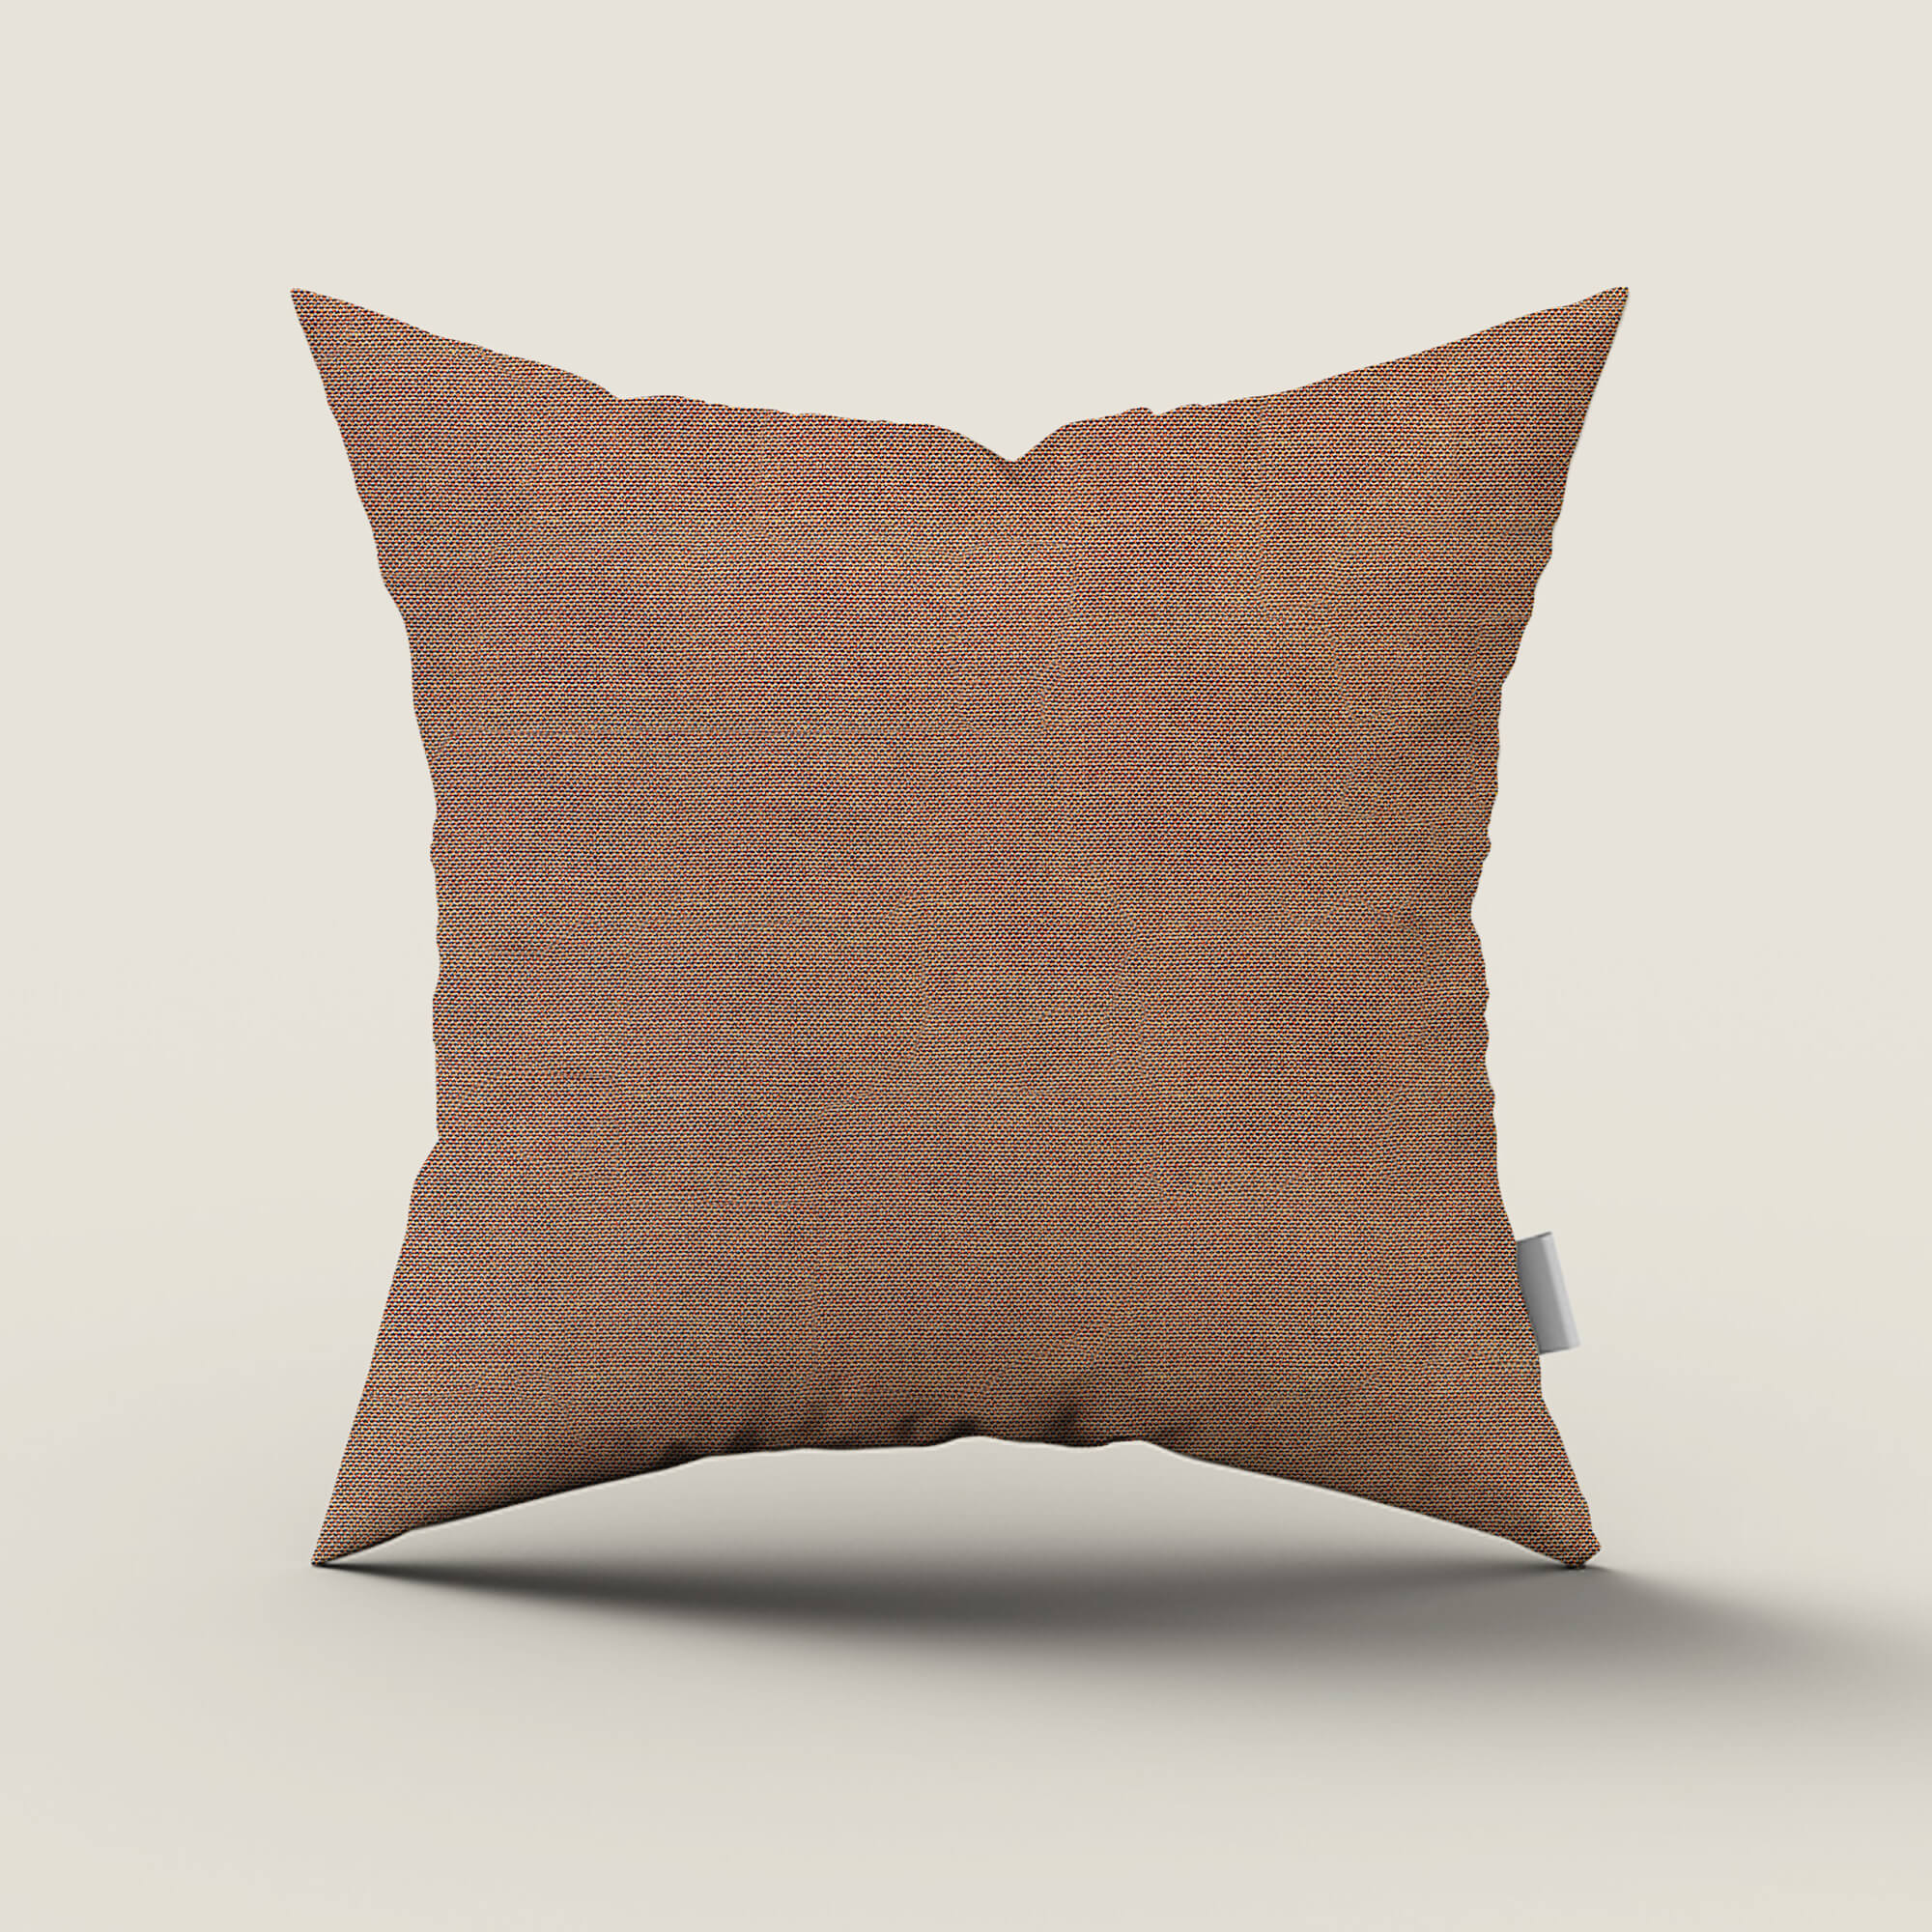 PENGI Waterproof Outdoor Pillow Case 1 Pcs - Blend Tobacco Brown